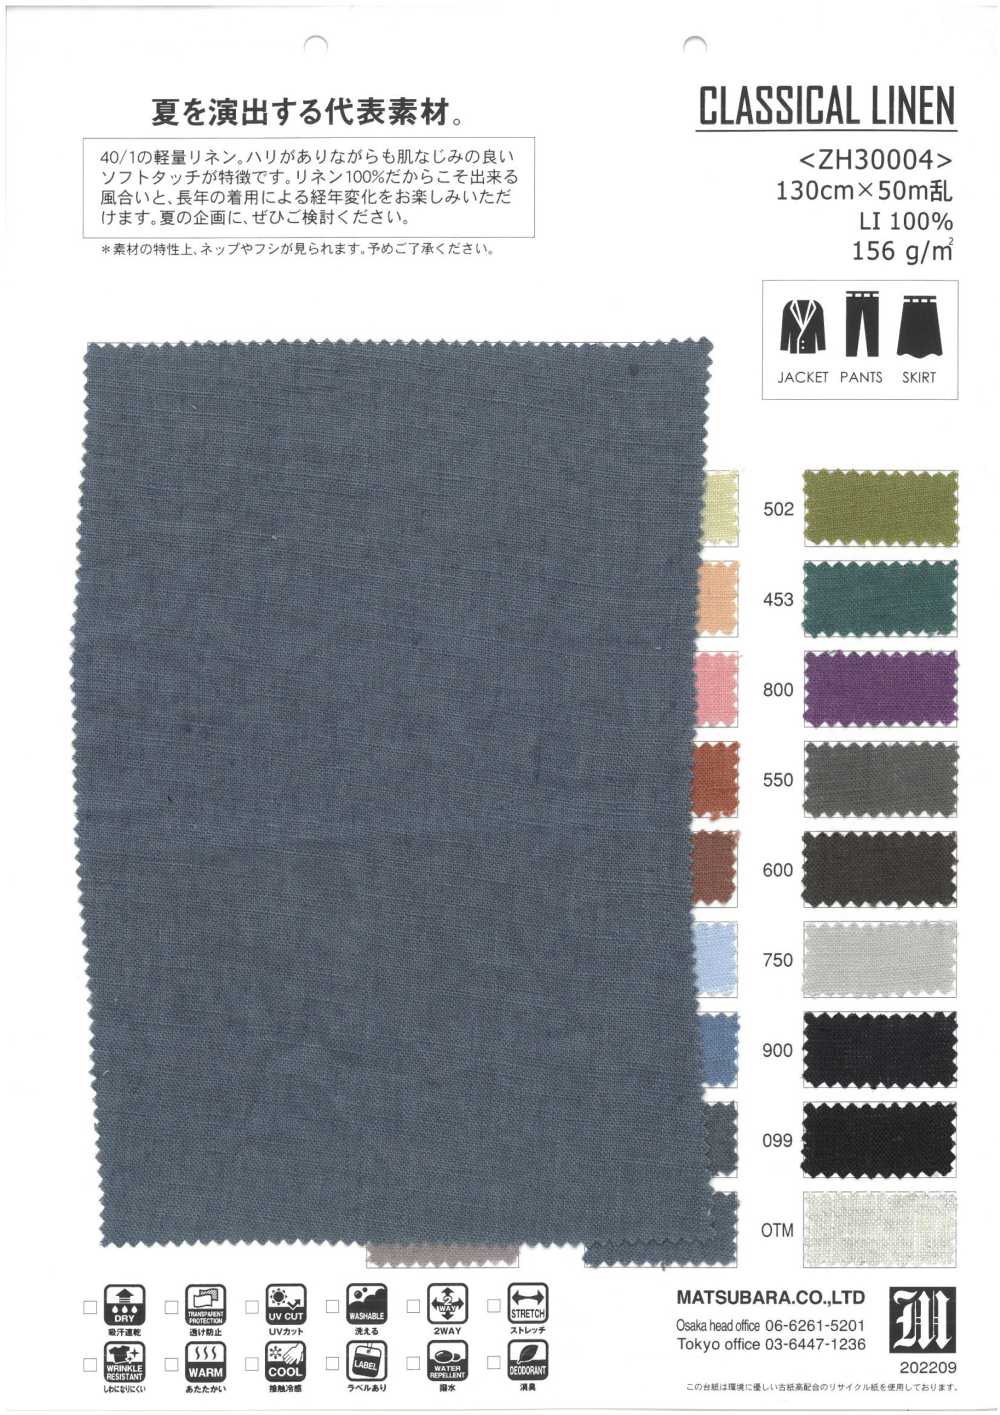 ZH30004 KLASSISCHES LEINEN[Textilgewebe] Matsubara